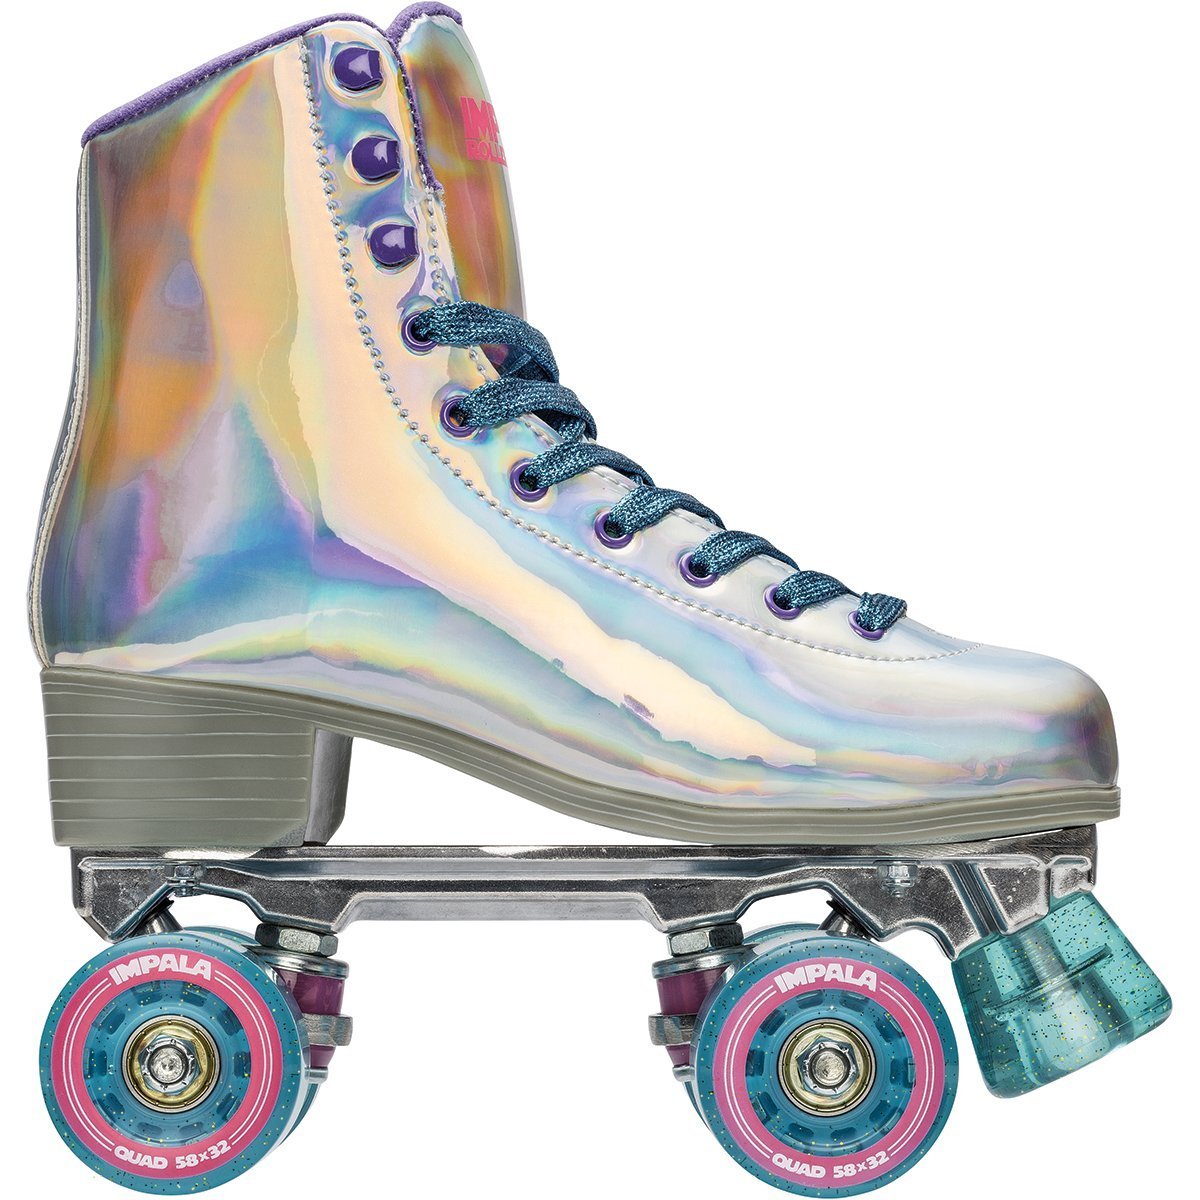 Impala Roller Skate Holographic - Doberman's Skate Shop - Doberman's Skate Shop